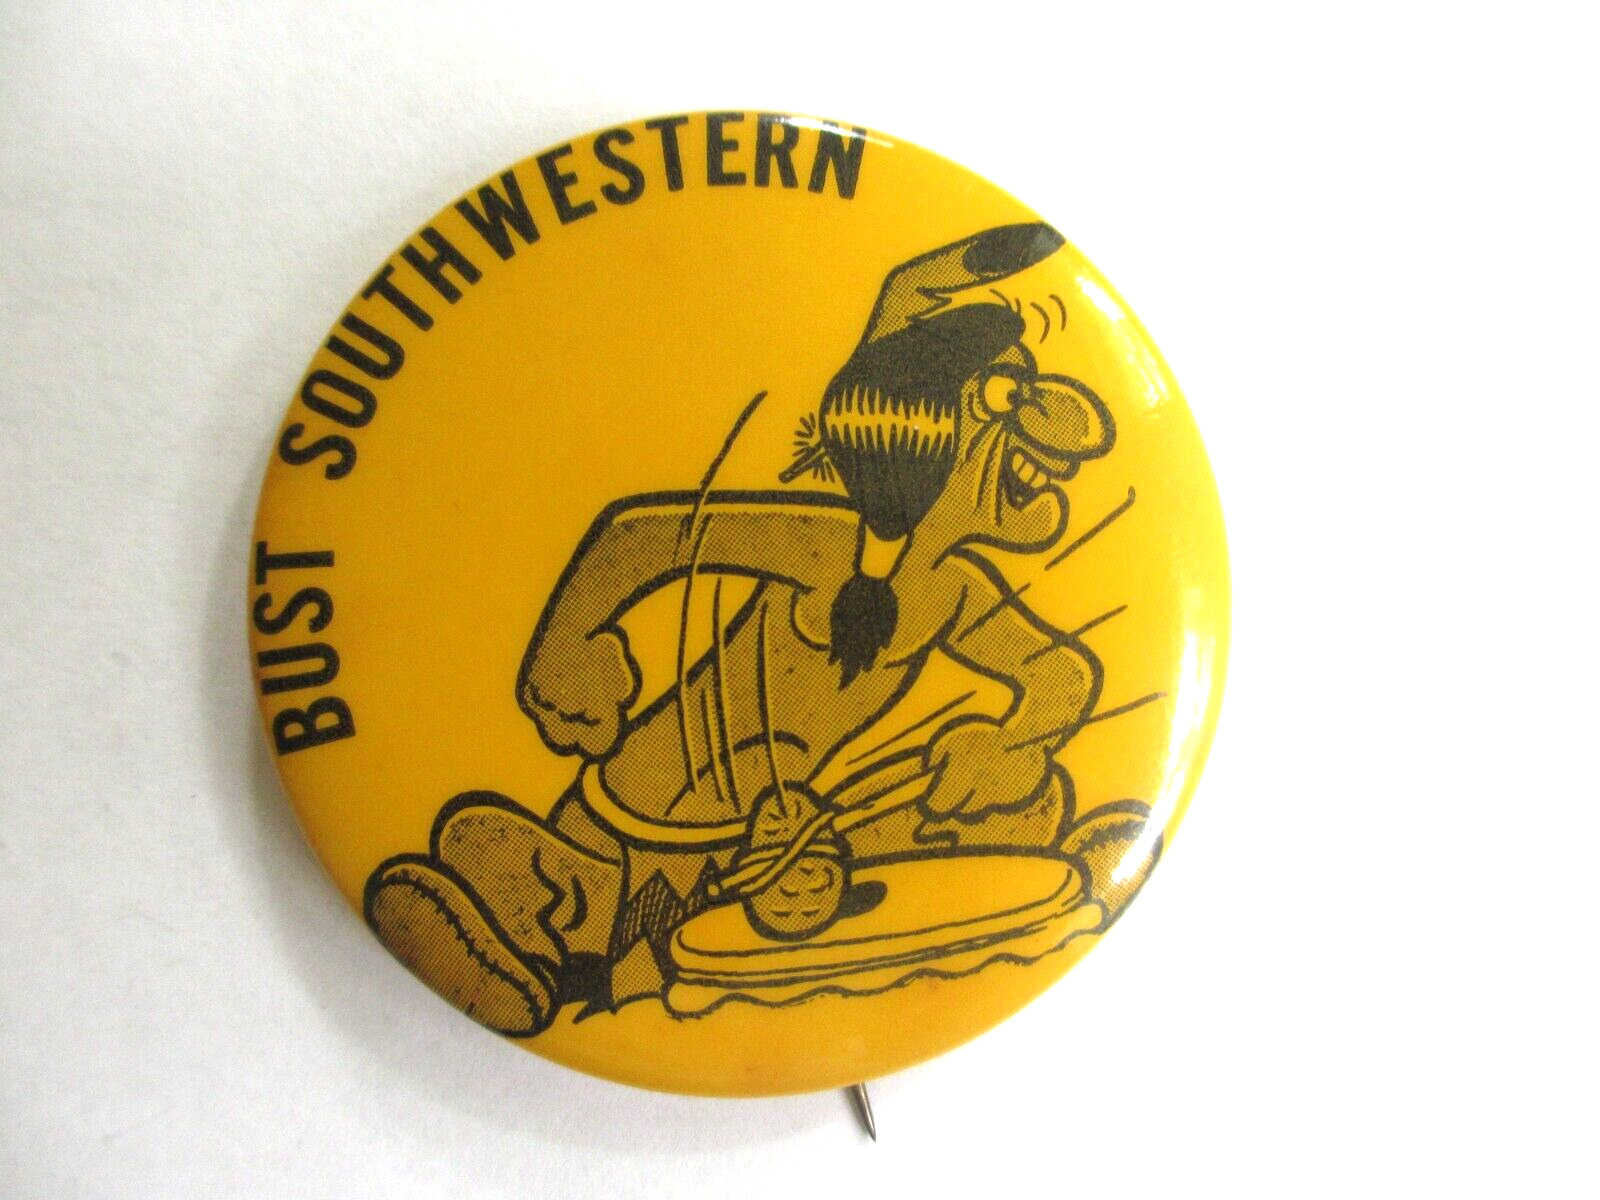 Vintage 1967 Ottawa University Kansas Homecoming vs. Southwestern College Button